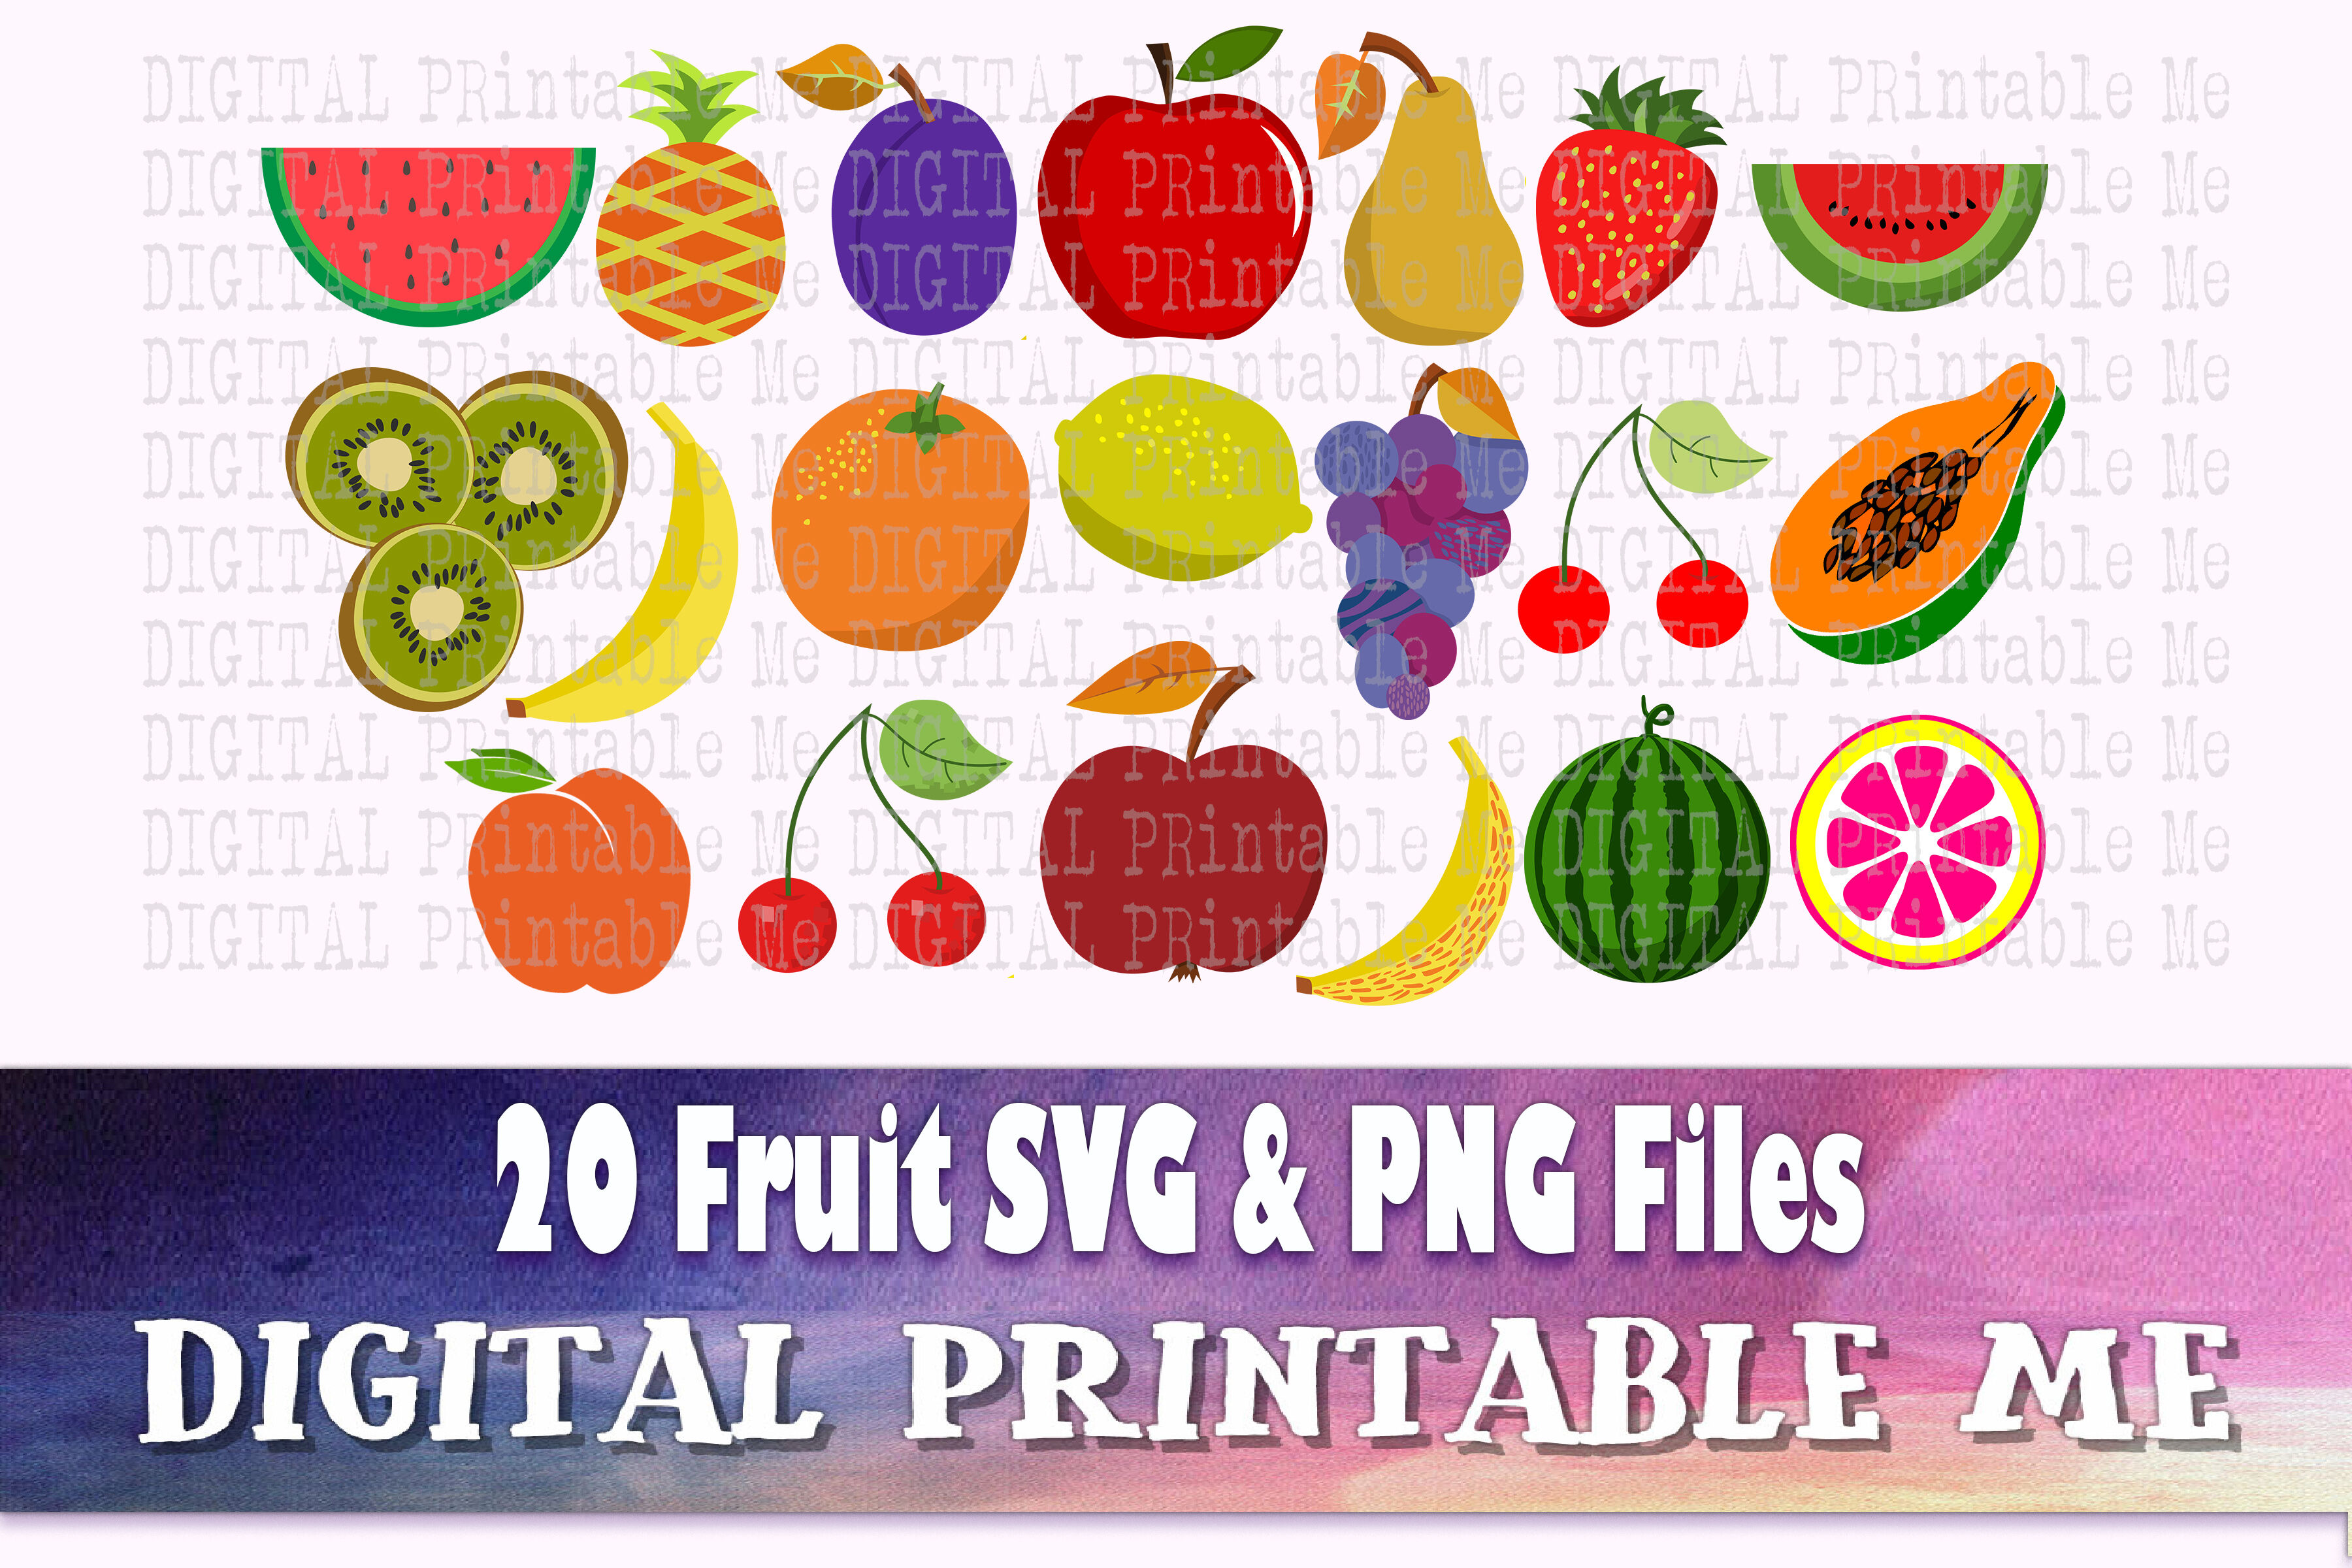 Fruit Svg Bundle Clip Art Png 20 Image Pack Digital Cut Files Fo By Digitalprintableme Thehungryjpeg Com